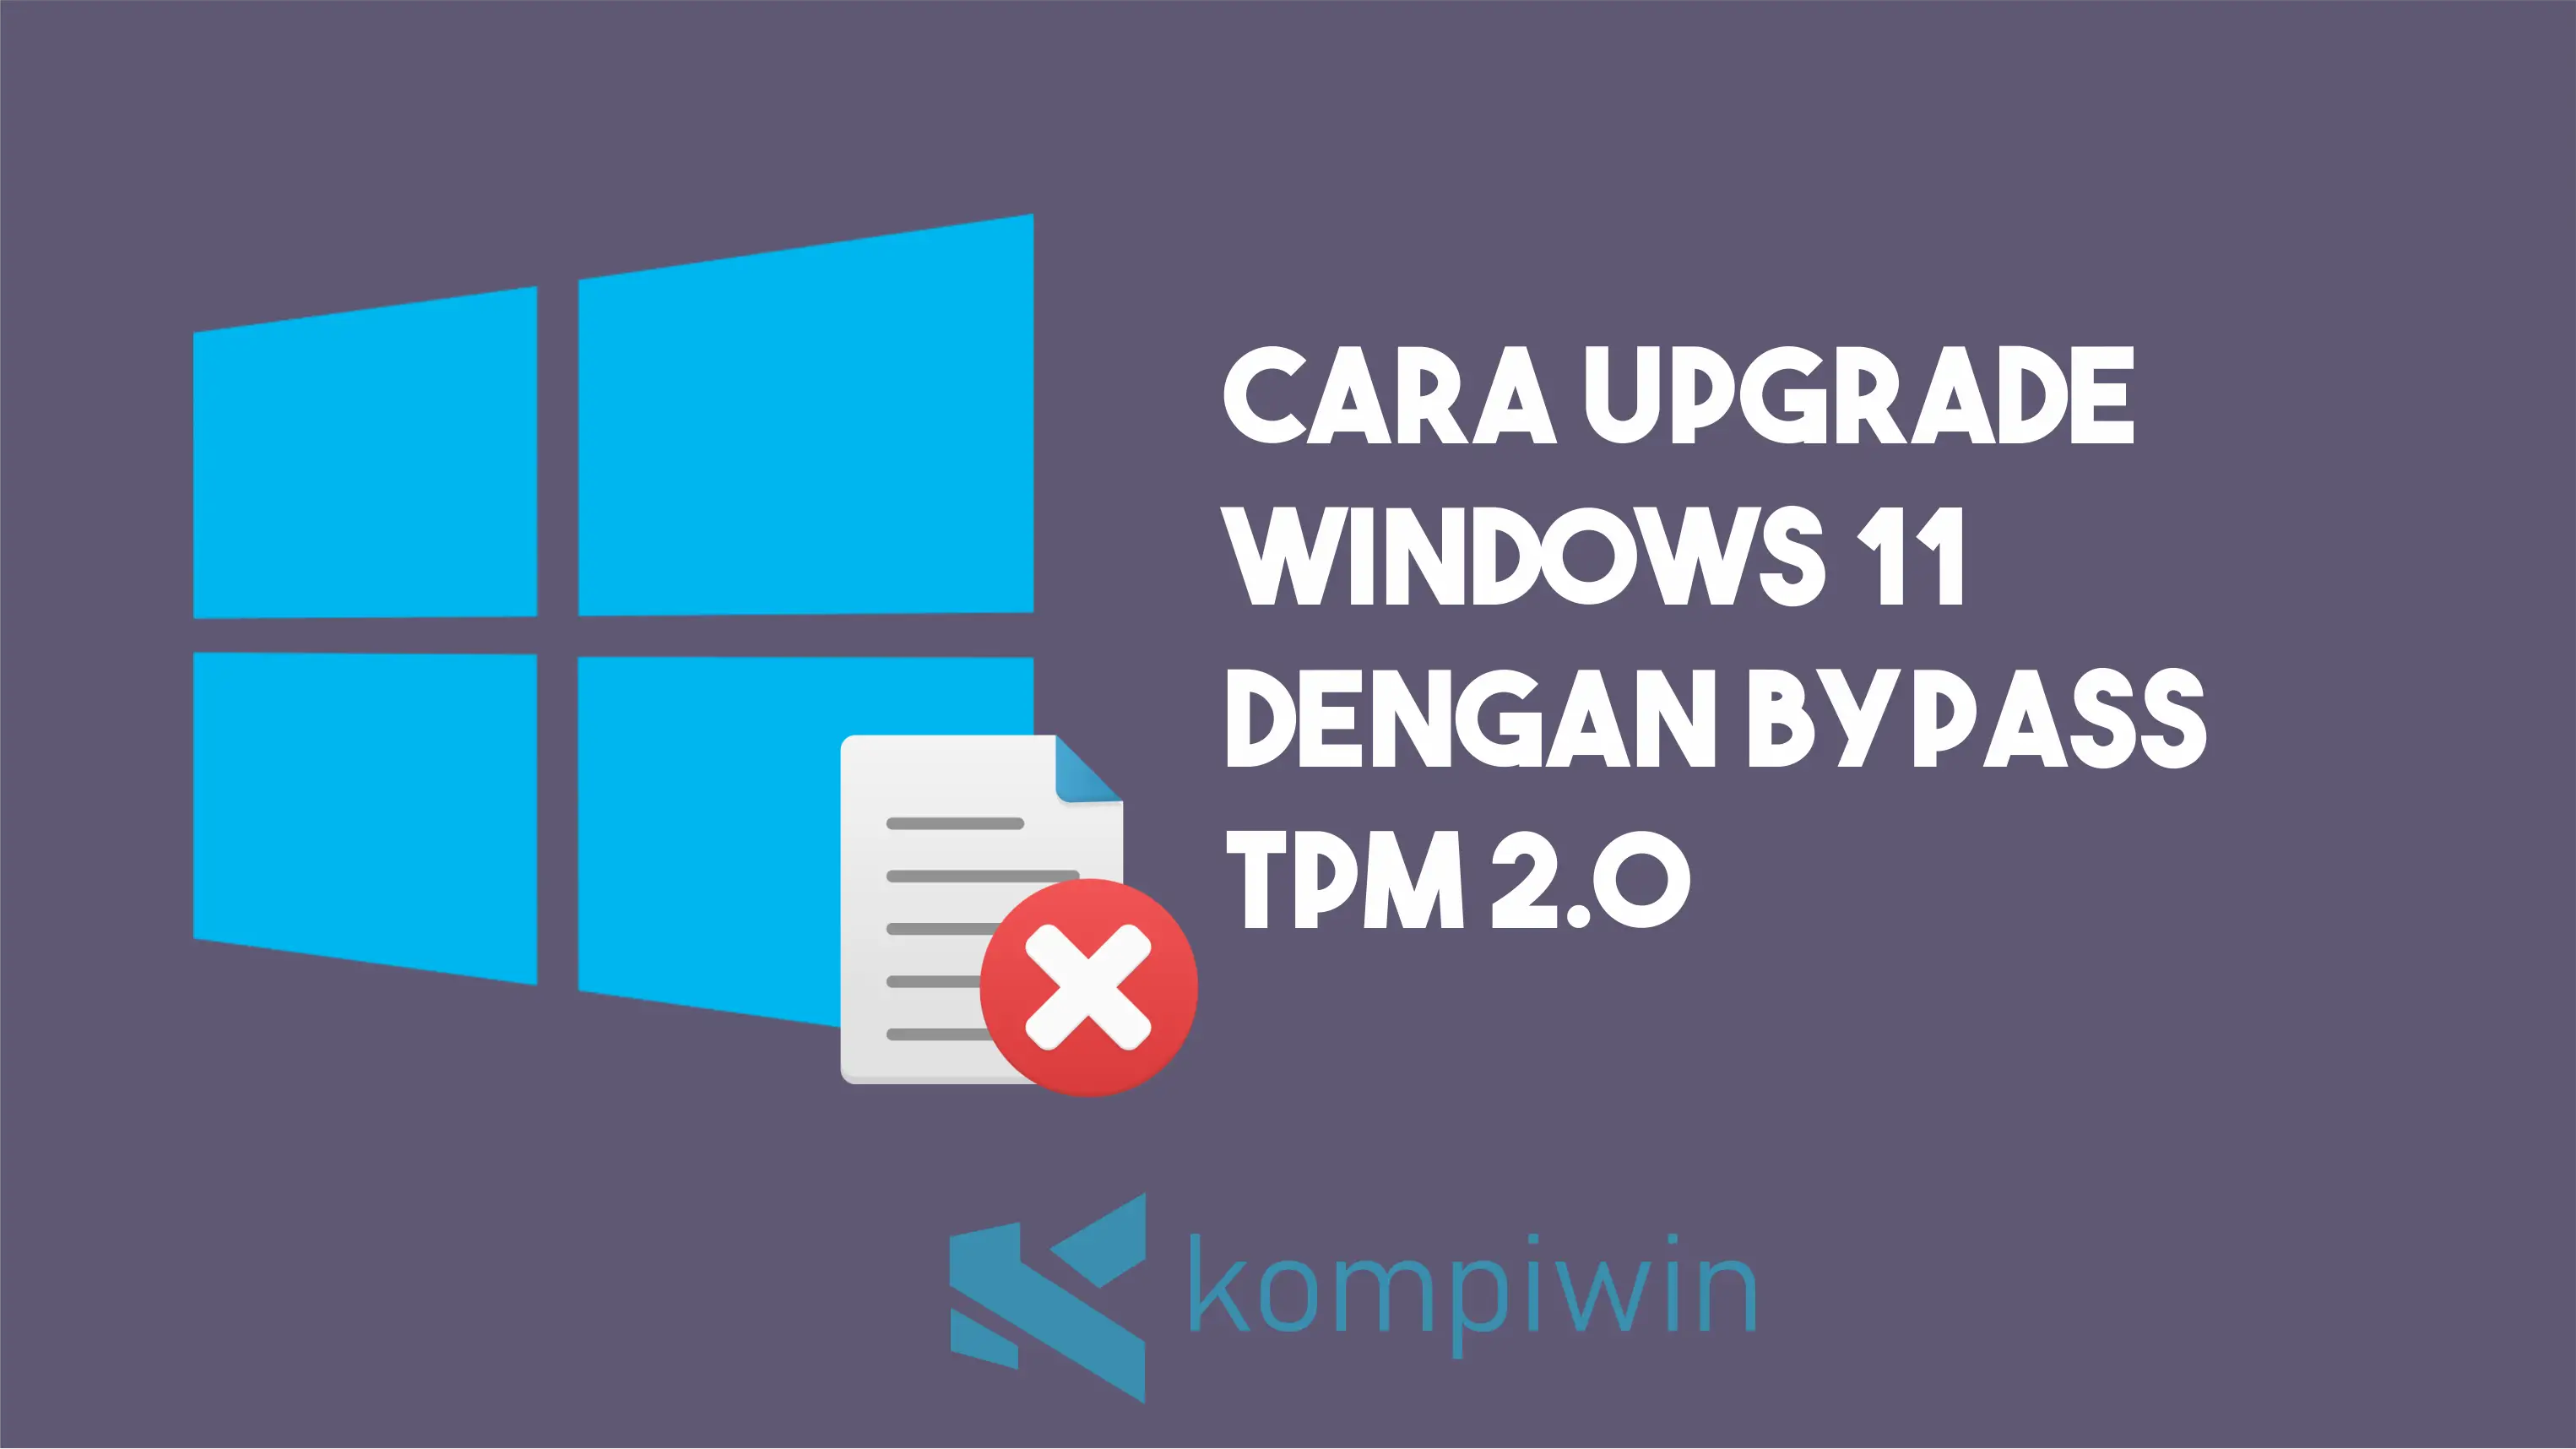 Cara Upgrade Windows 10 Ke Windows 11 Dengan Bypass TPM 2.0 1